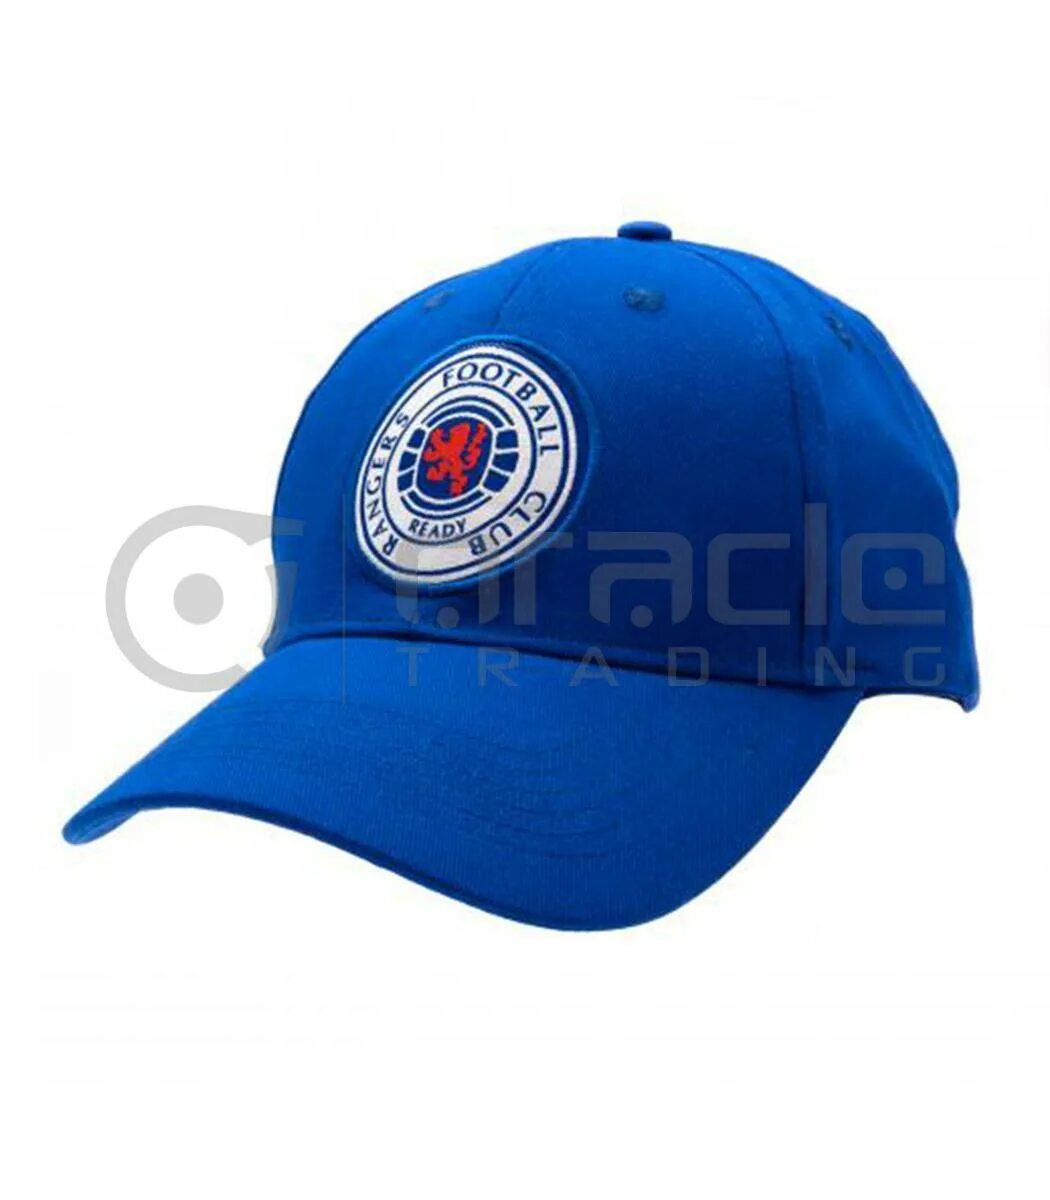 Бейсболка 58 регион. Genuine Merchandise & Outdoor cap. C cap.